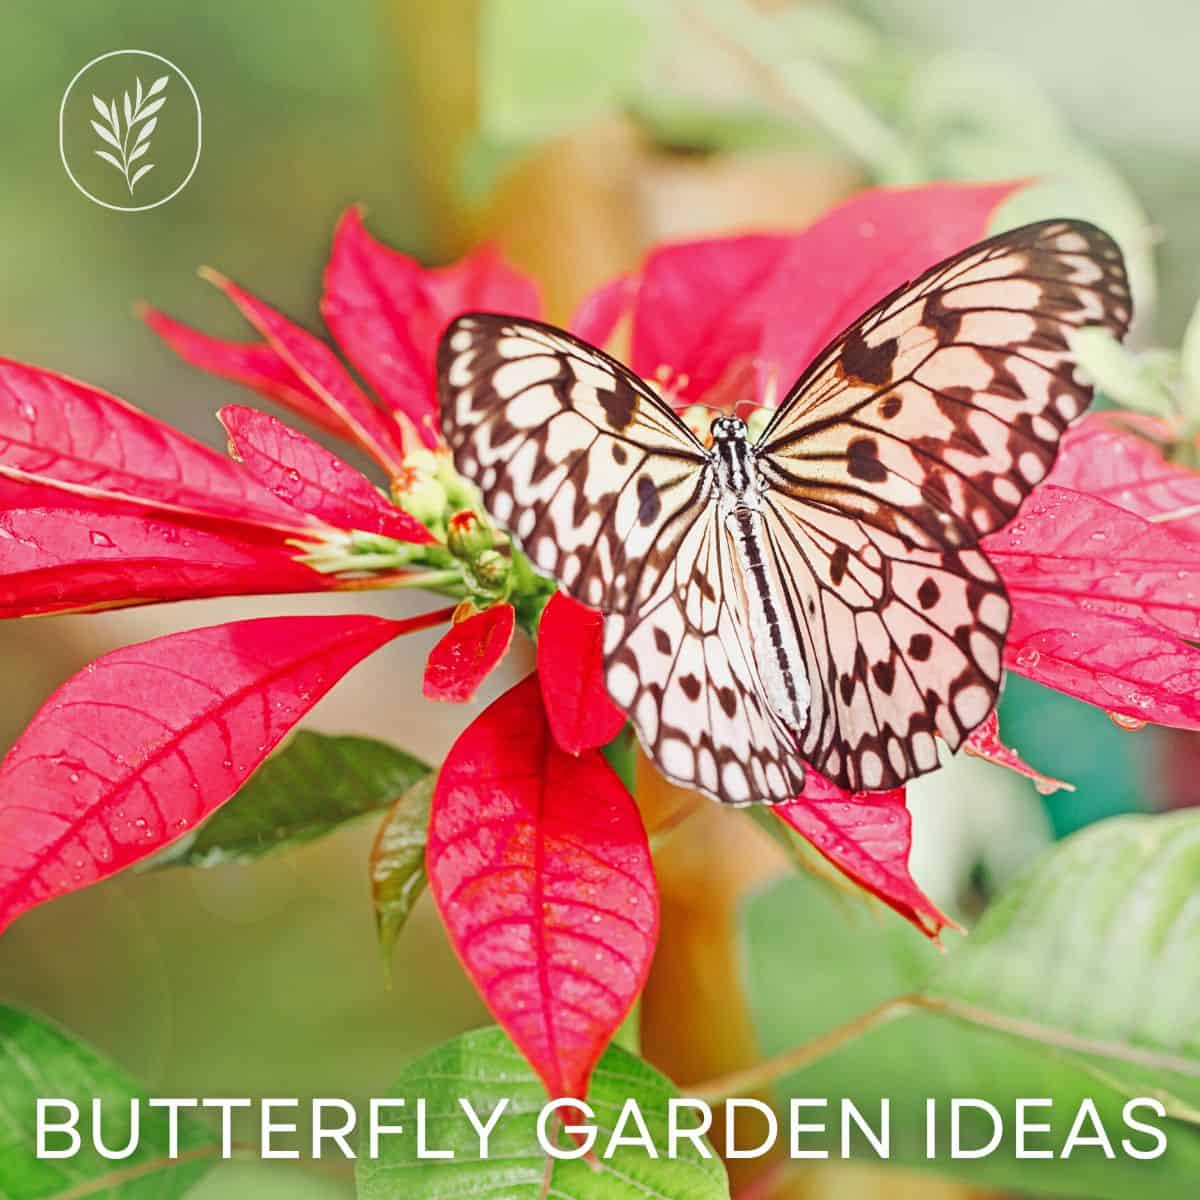 Butterfly garden ideas via @home4theharvest